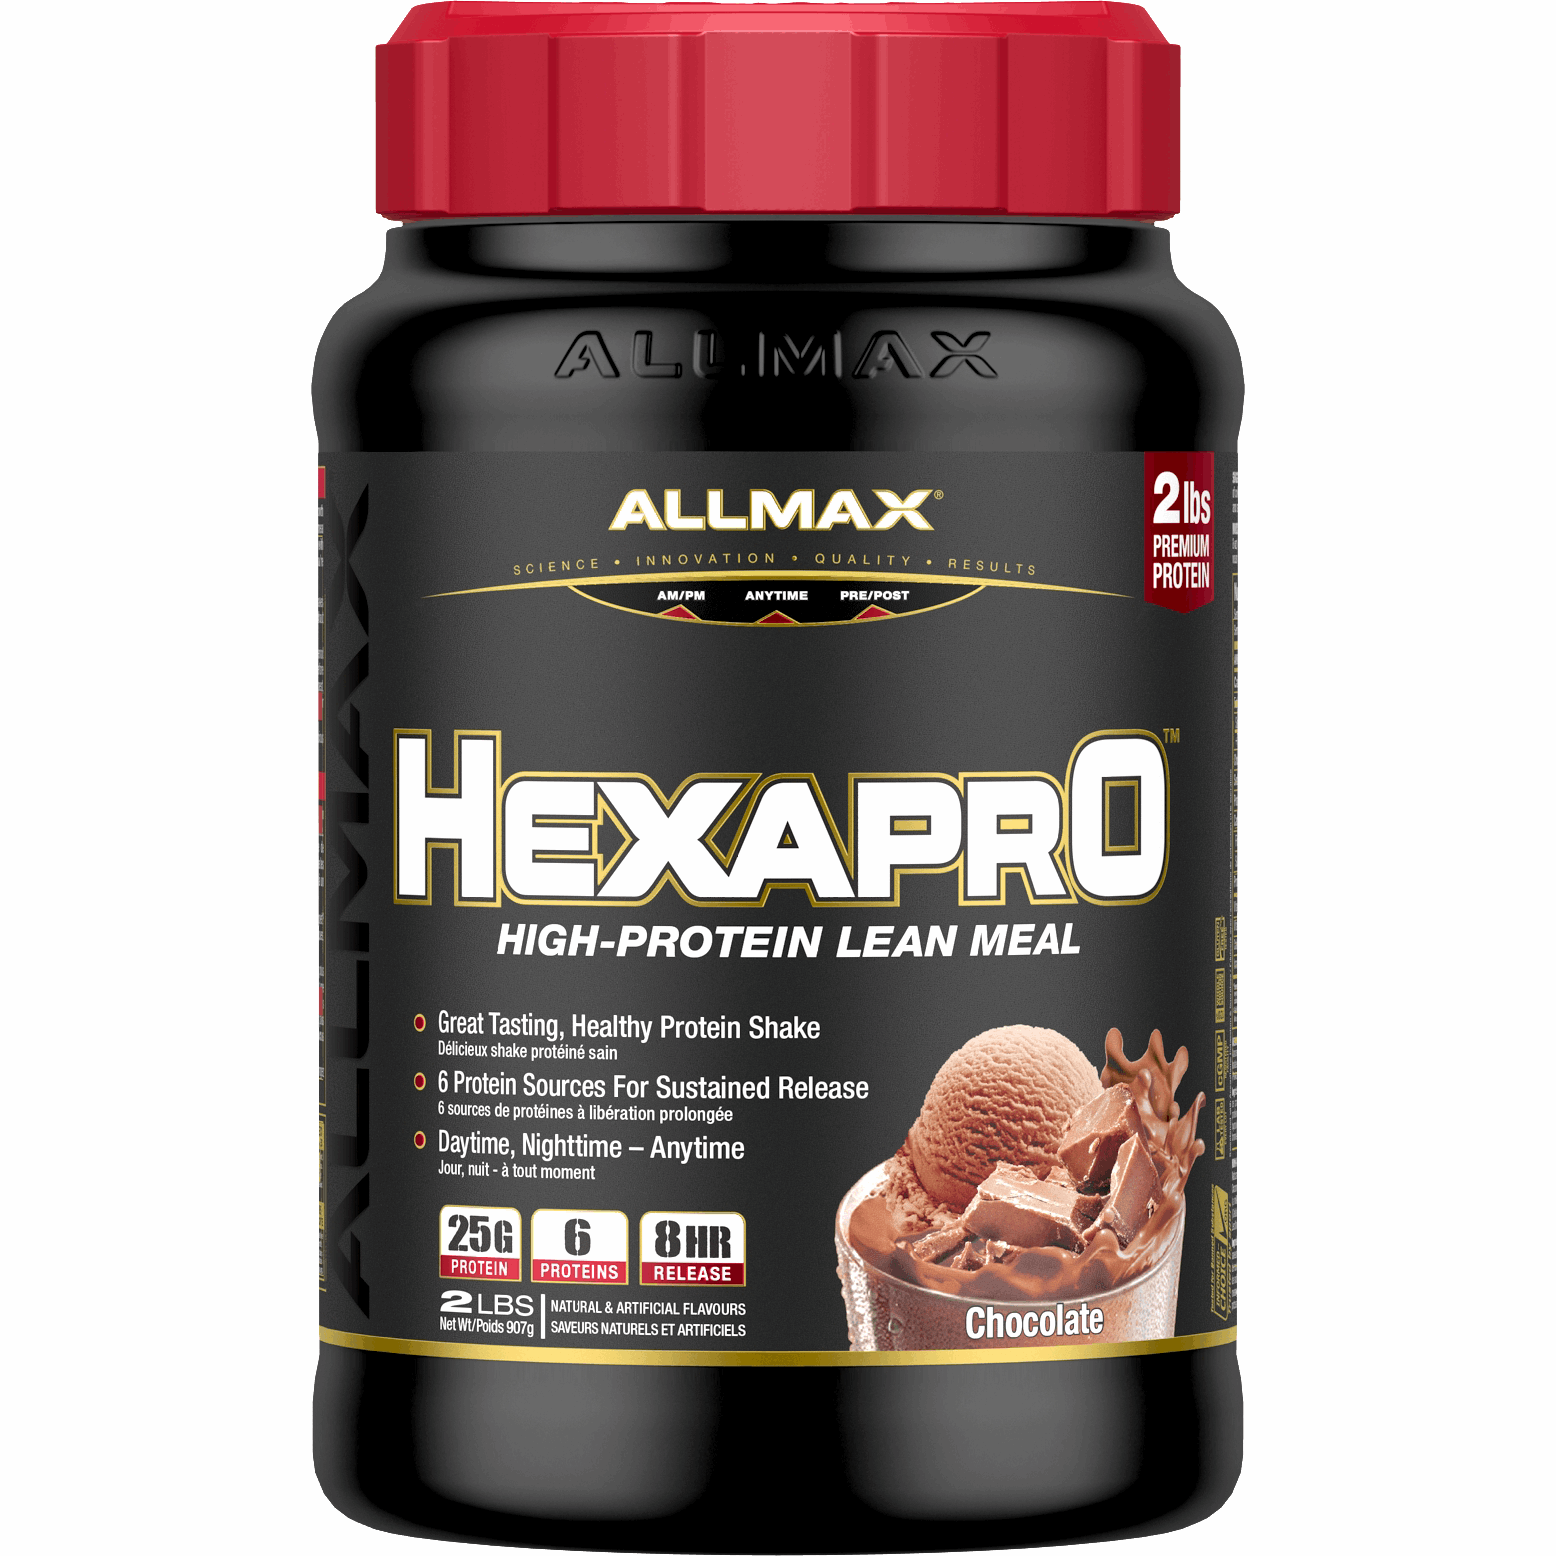 ALLMAX Hexapro (2lbs) allmax-hexapro-3lbs Whey Protein Blend Chocolate Allmax Nutrition